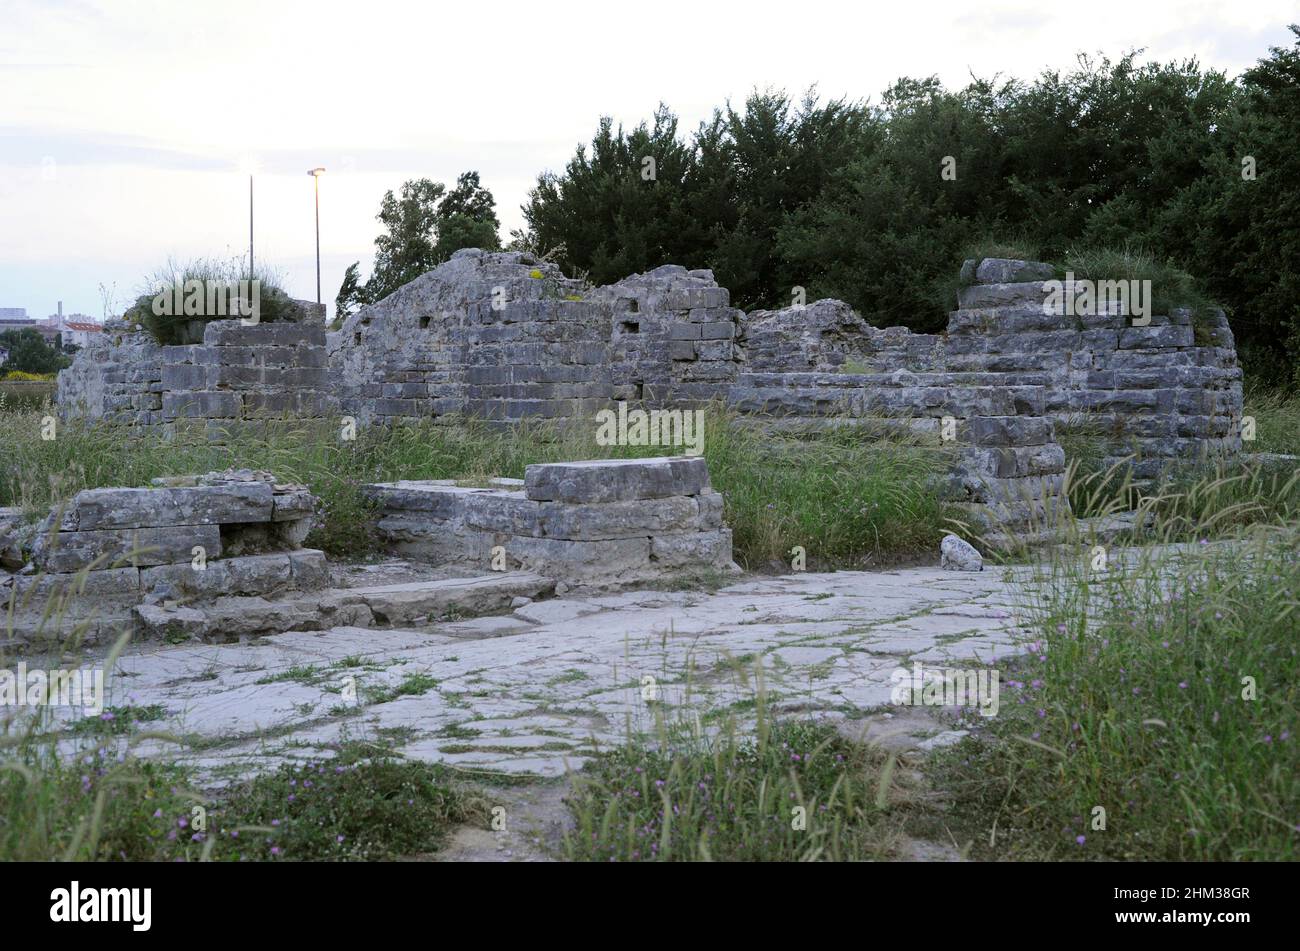 Croatia, Solin. Ancient city of Salona. Colonia Martia Ivlia Valeria. It was the capital of the Roman province of Dalmatia. Archaeological ruins. Stock Photo